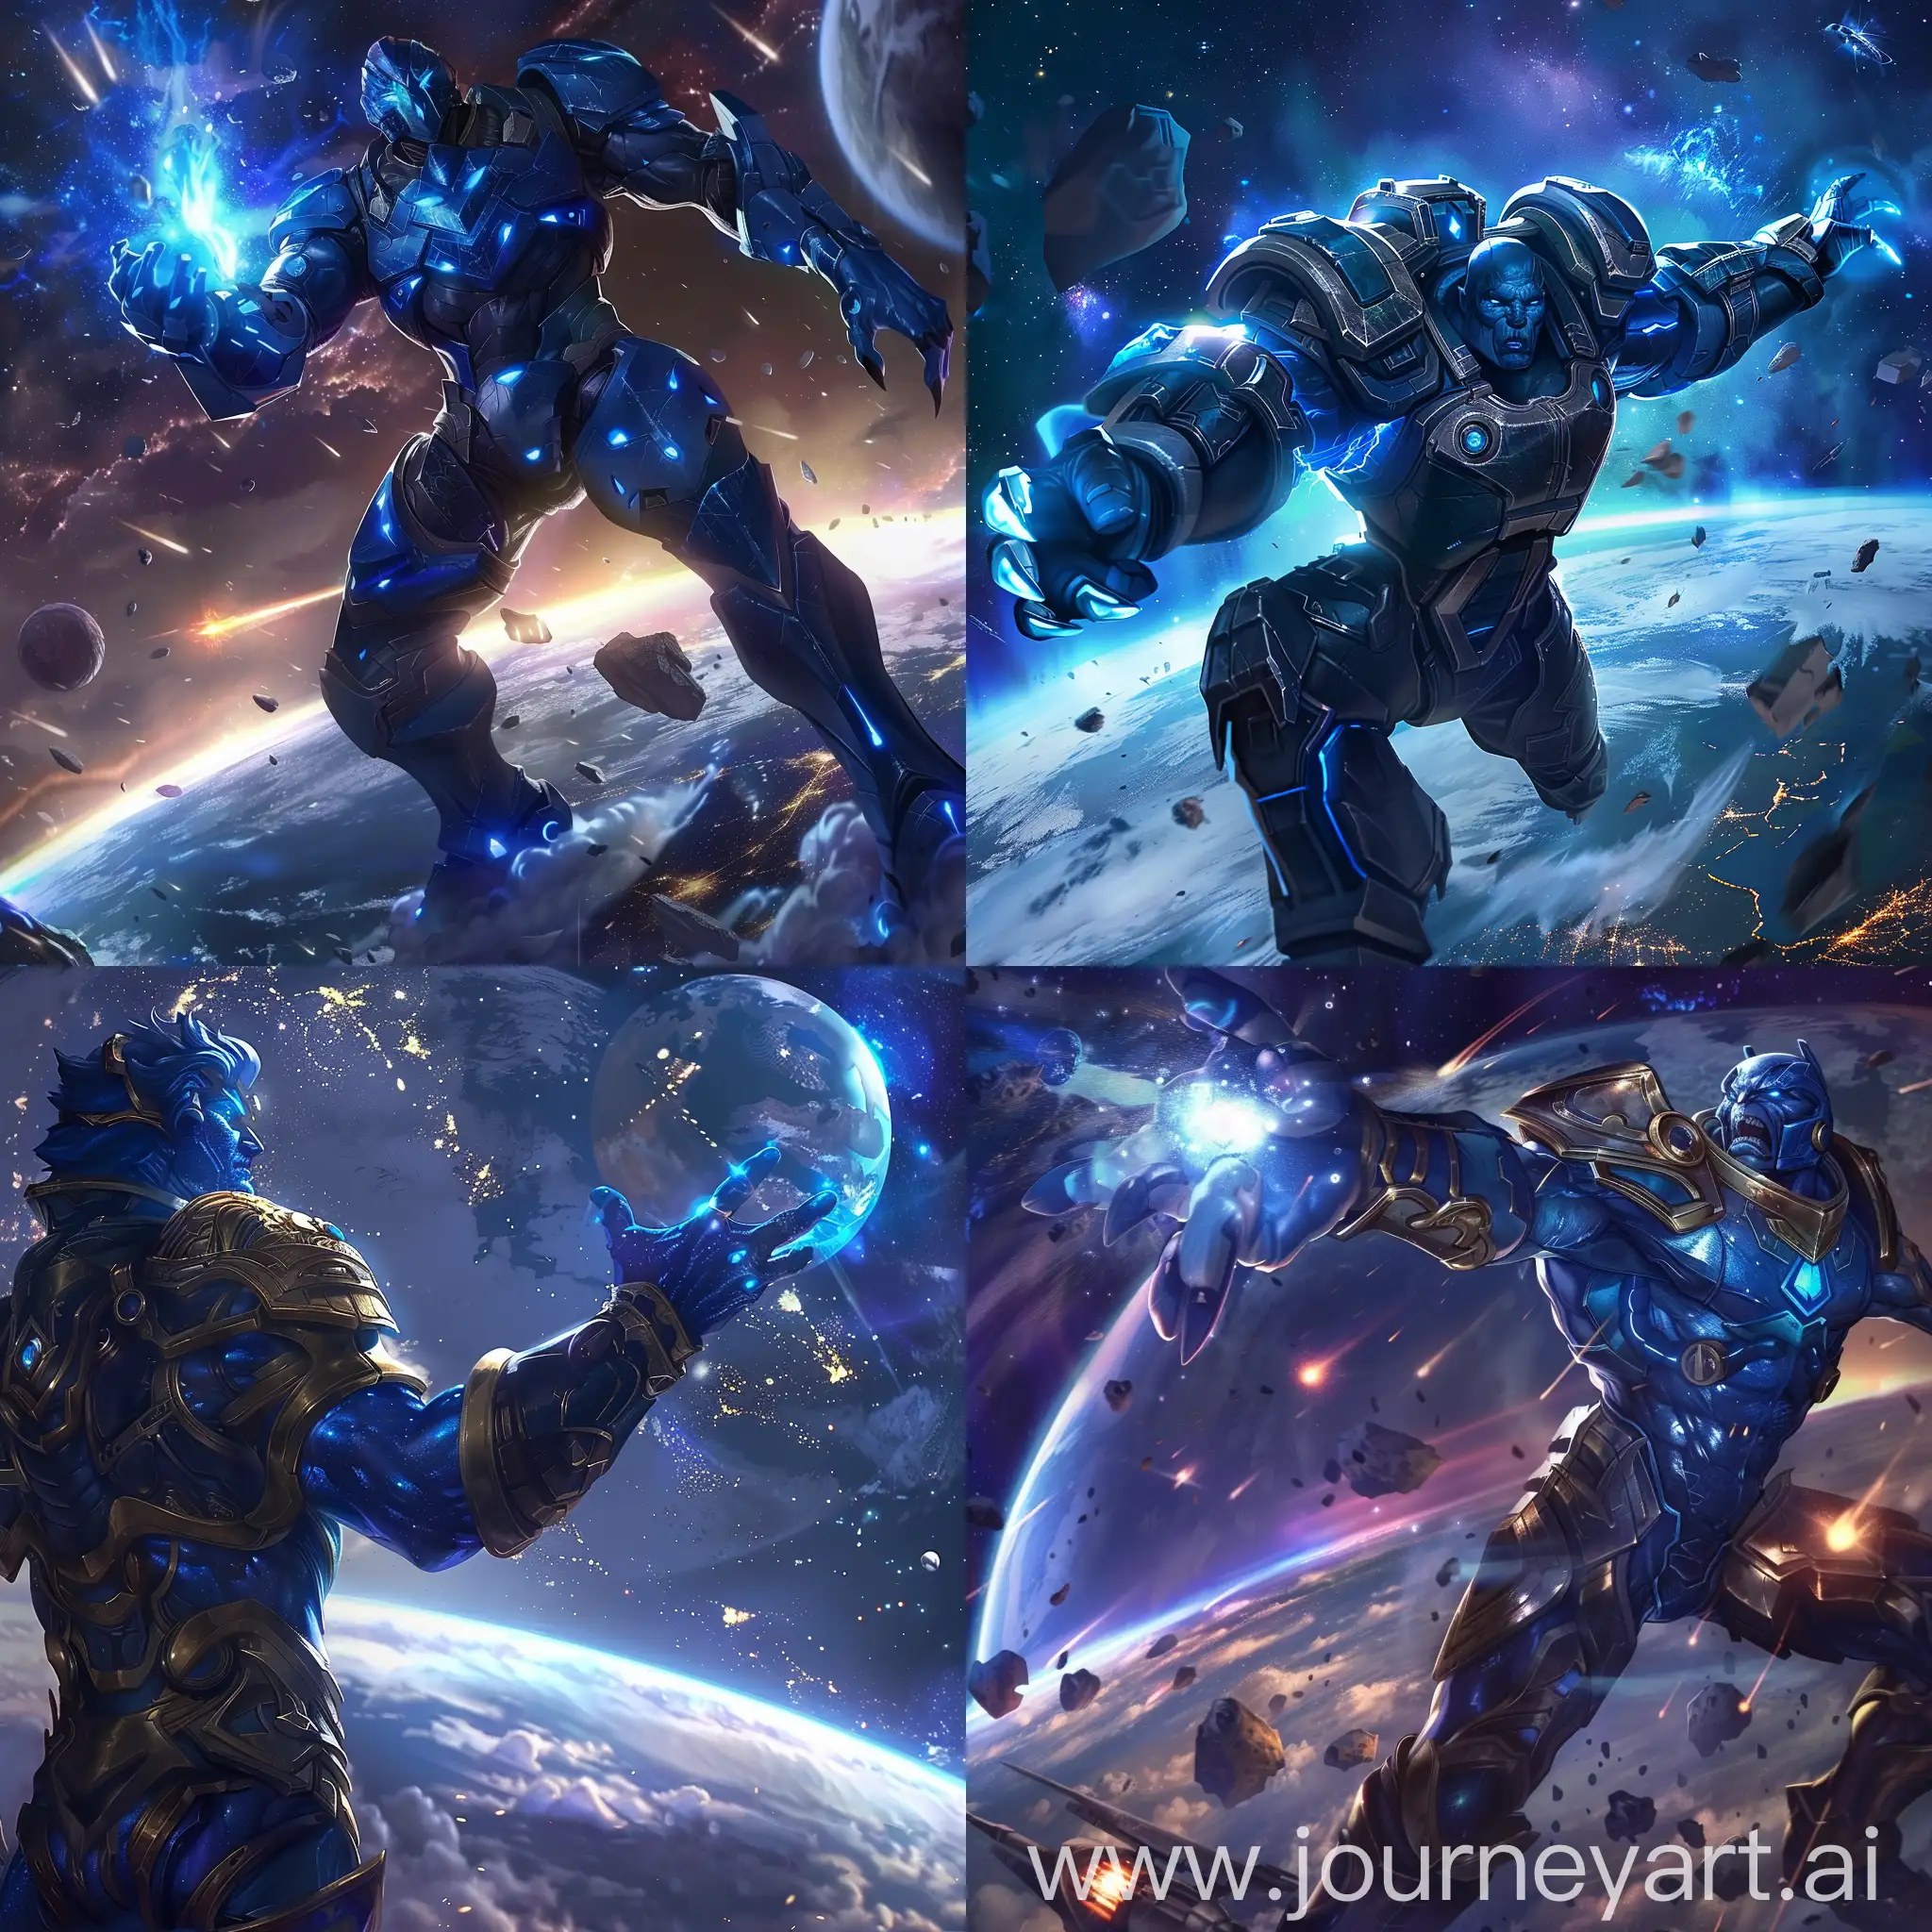 Garen-Defends-Earth-A-League-of-Legends-Heros-Cosmic-Battle